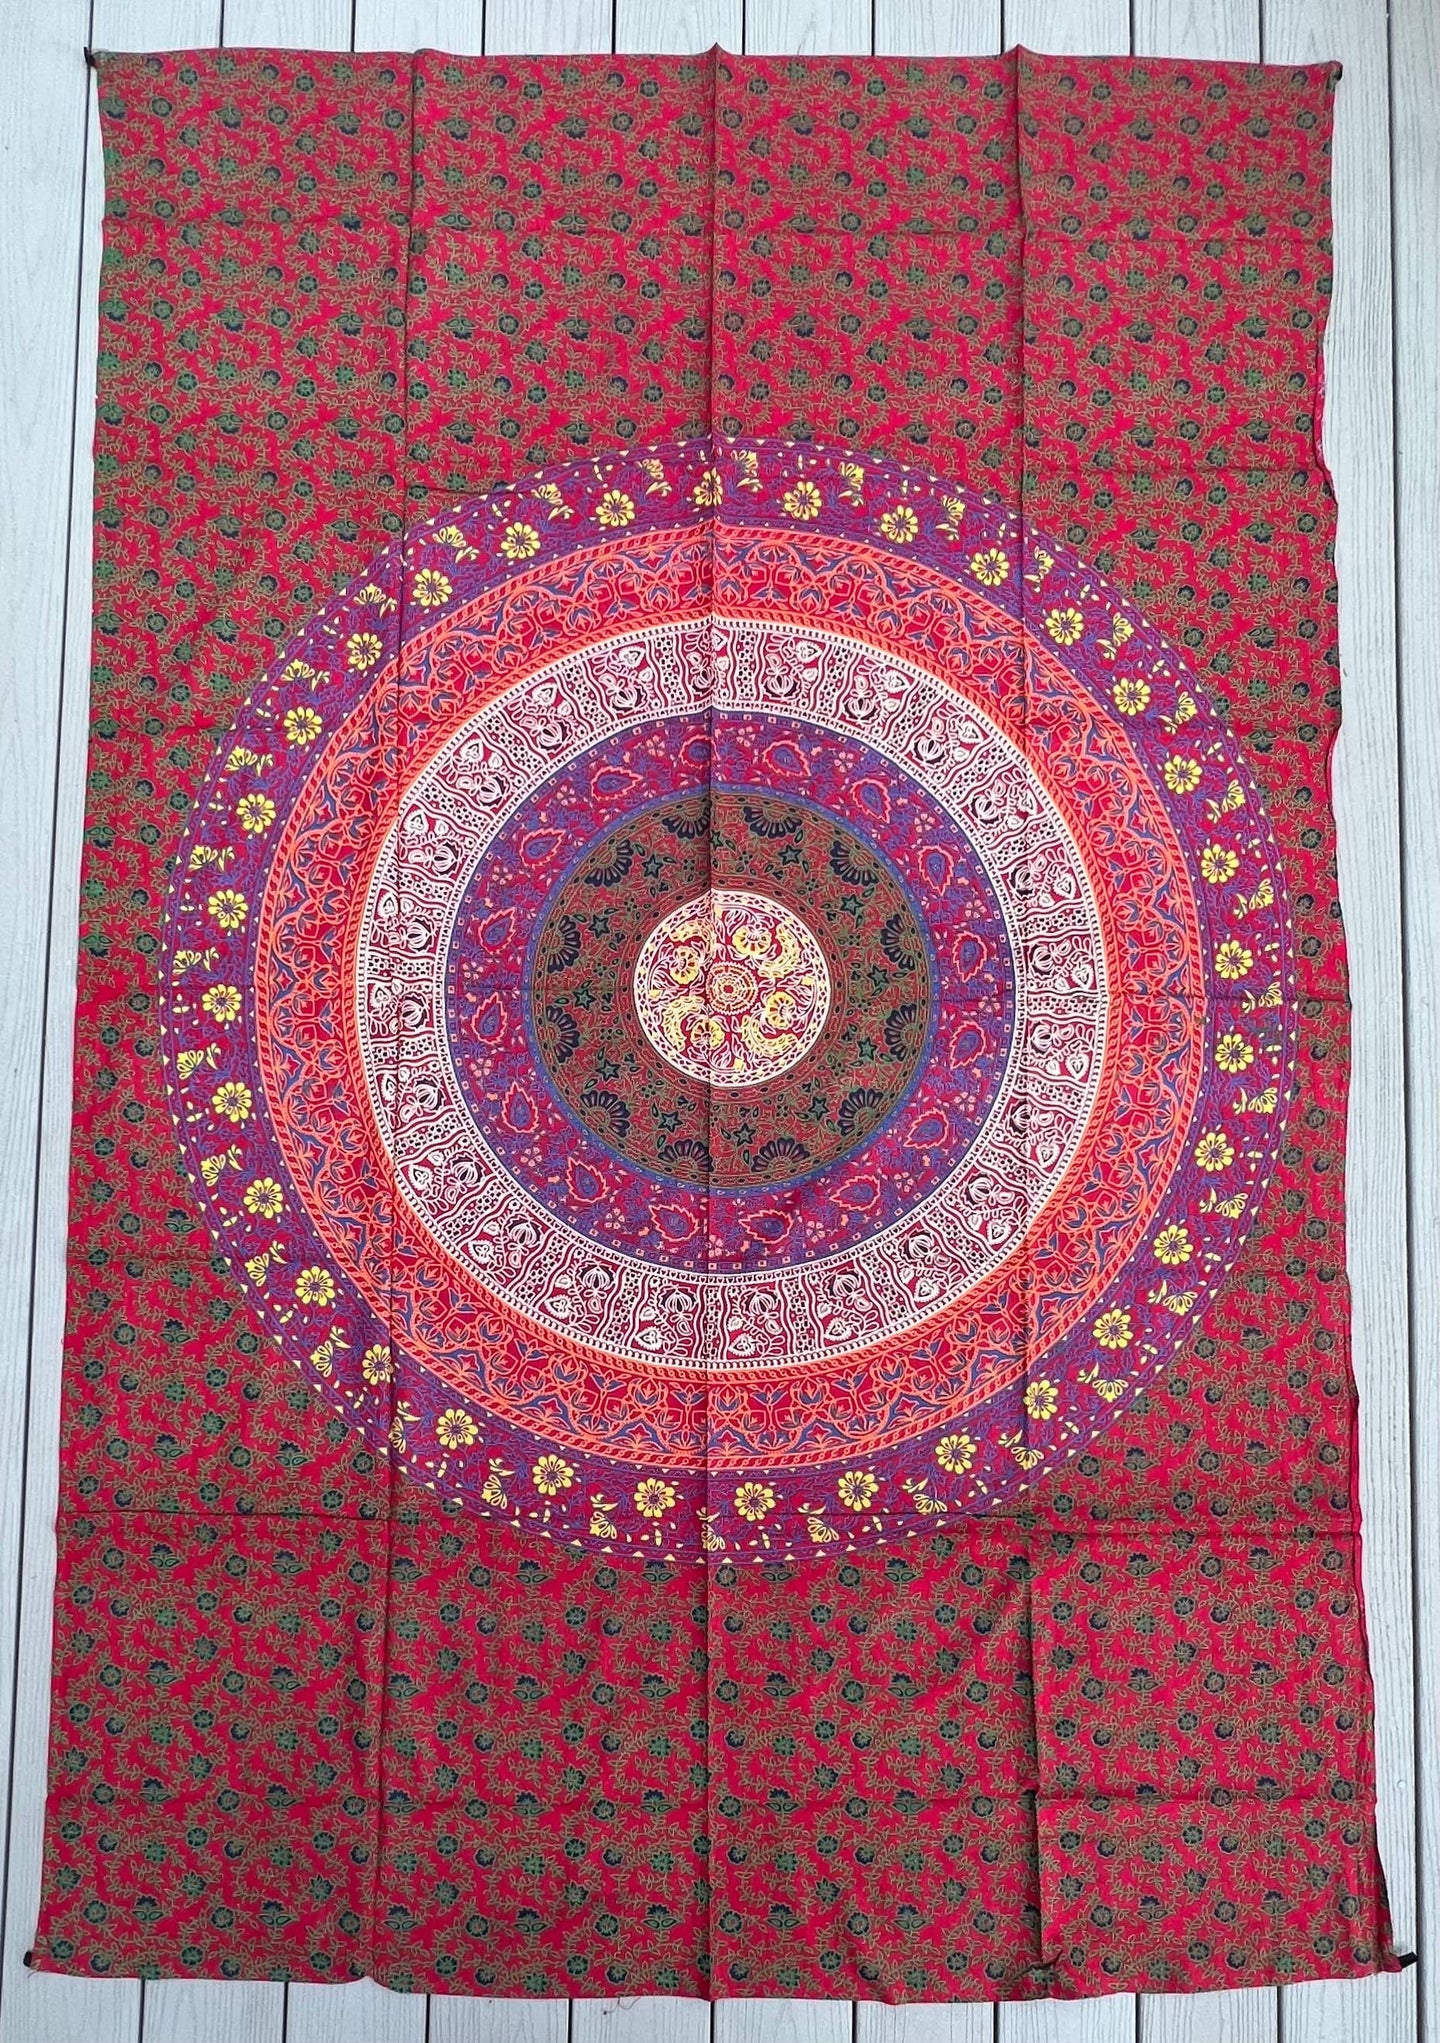 Floral Mandala Tapestry Wall Decor Beach Throw 80X50 Inches